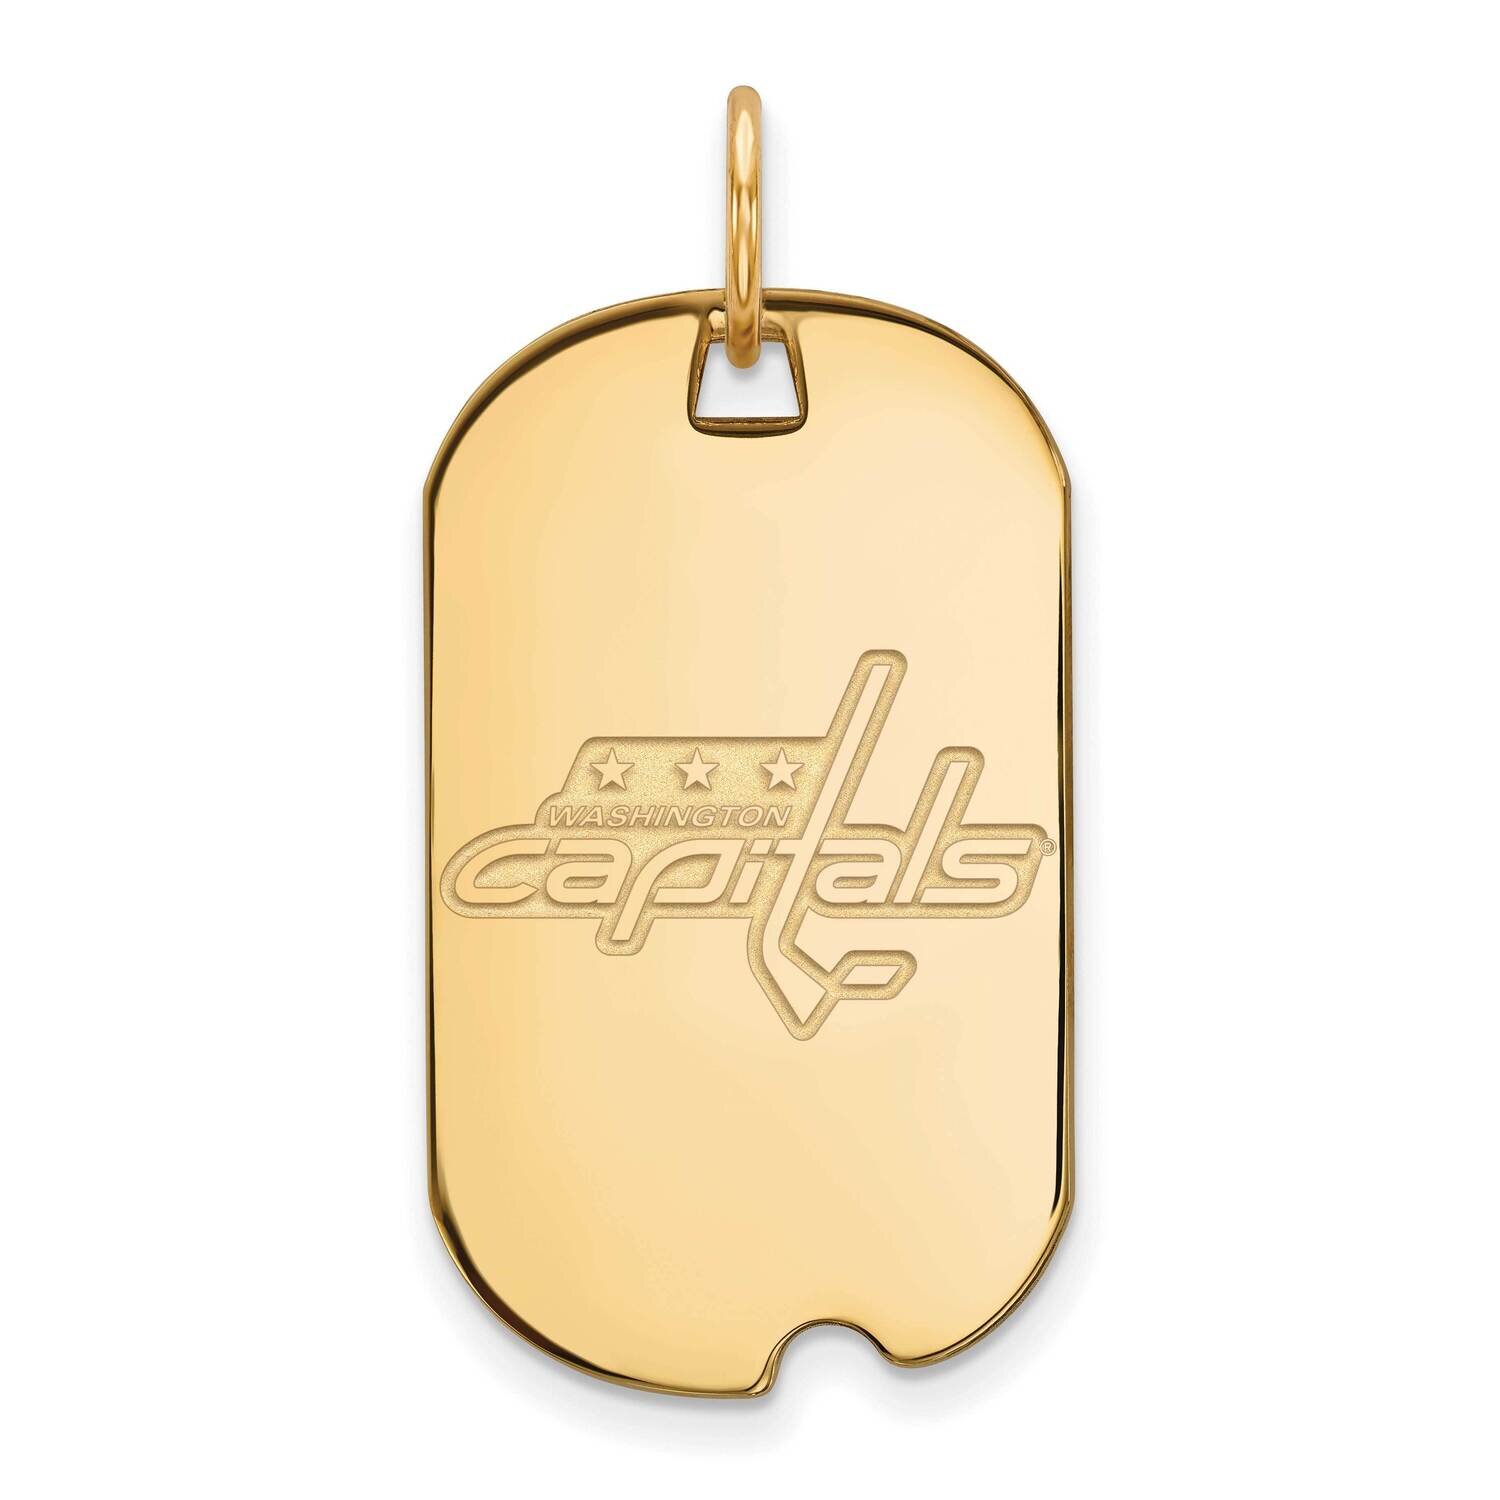 Washington Capitals Small Dog Tag Gold-plated Sterling Silver GP007CAP